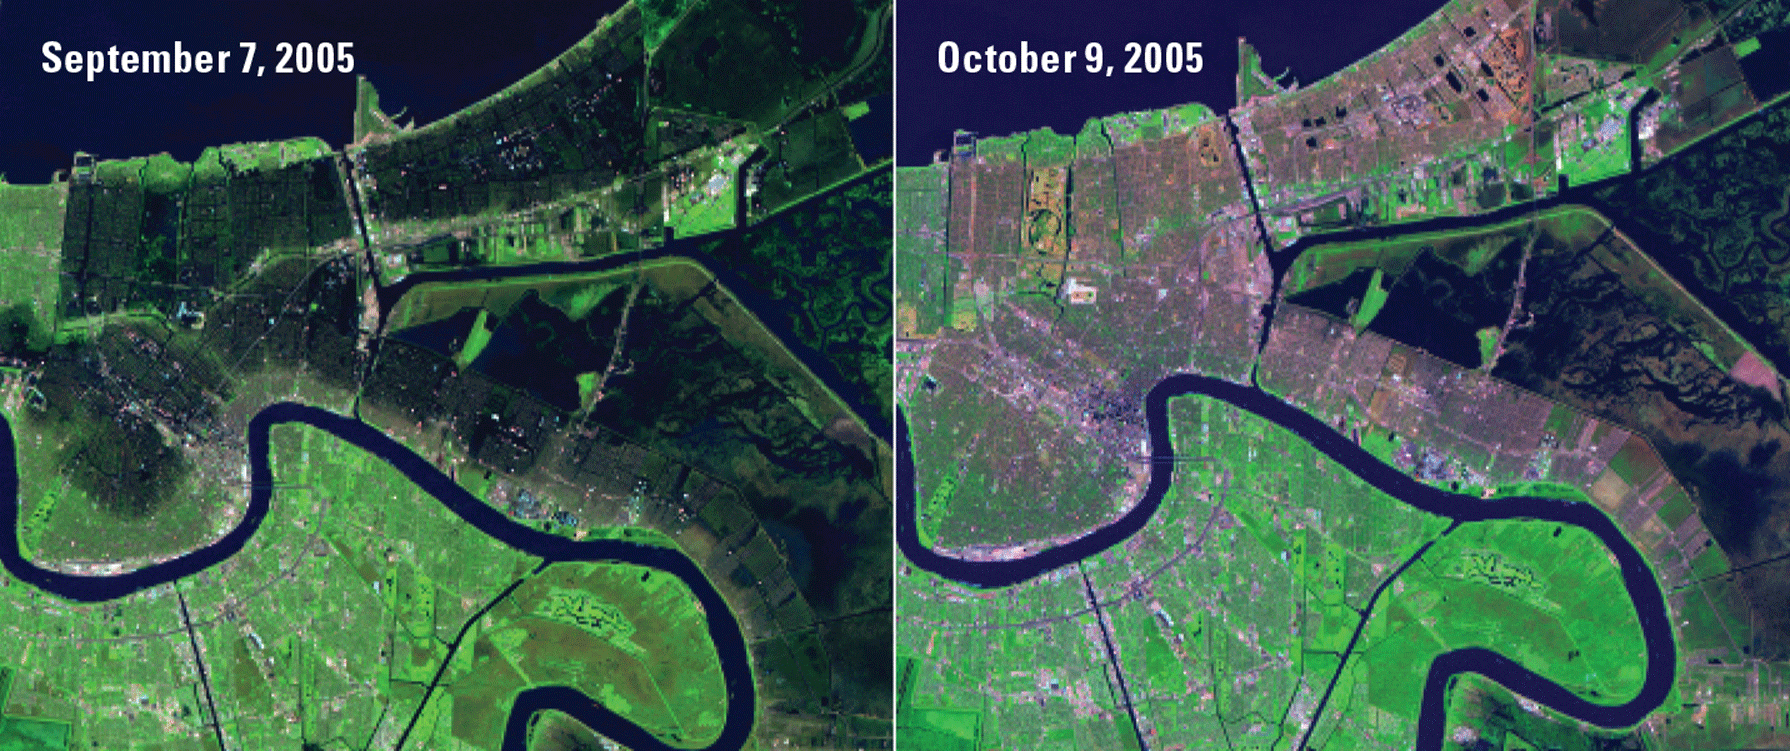 Images showing vast flooding and destroyed vegetation in Louisiana after Hurricane
                     Katrina.